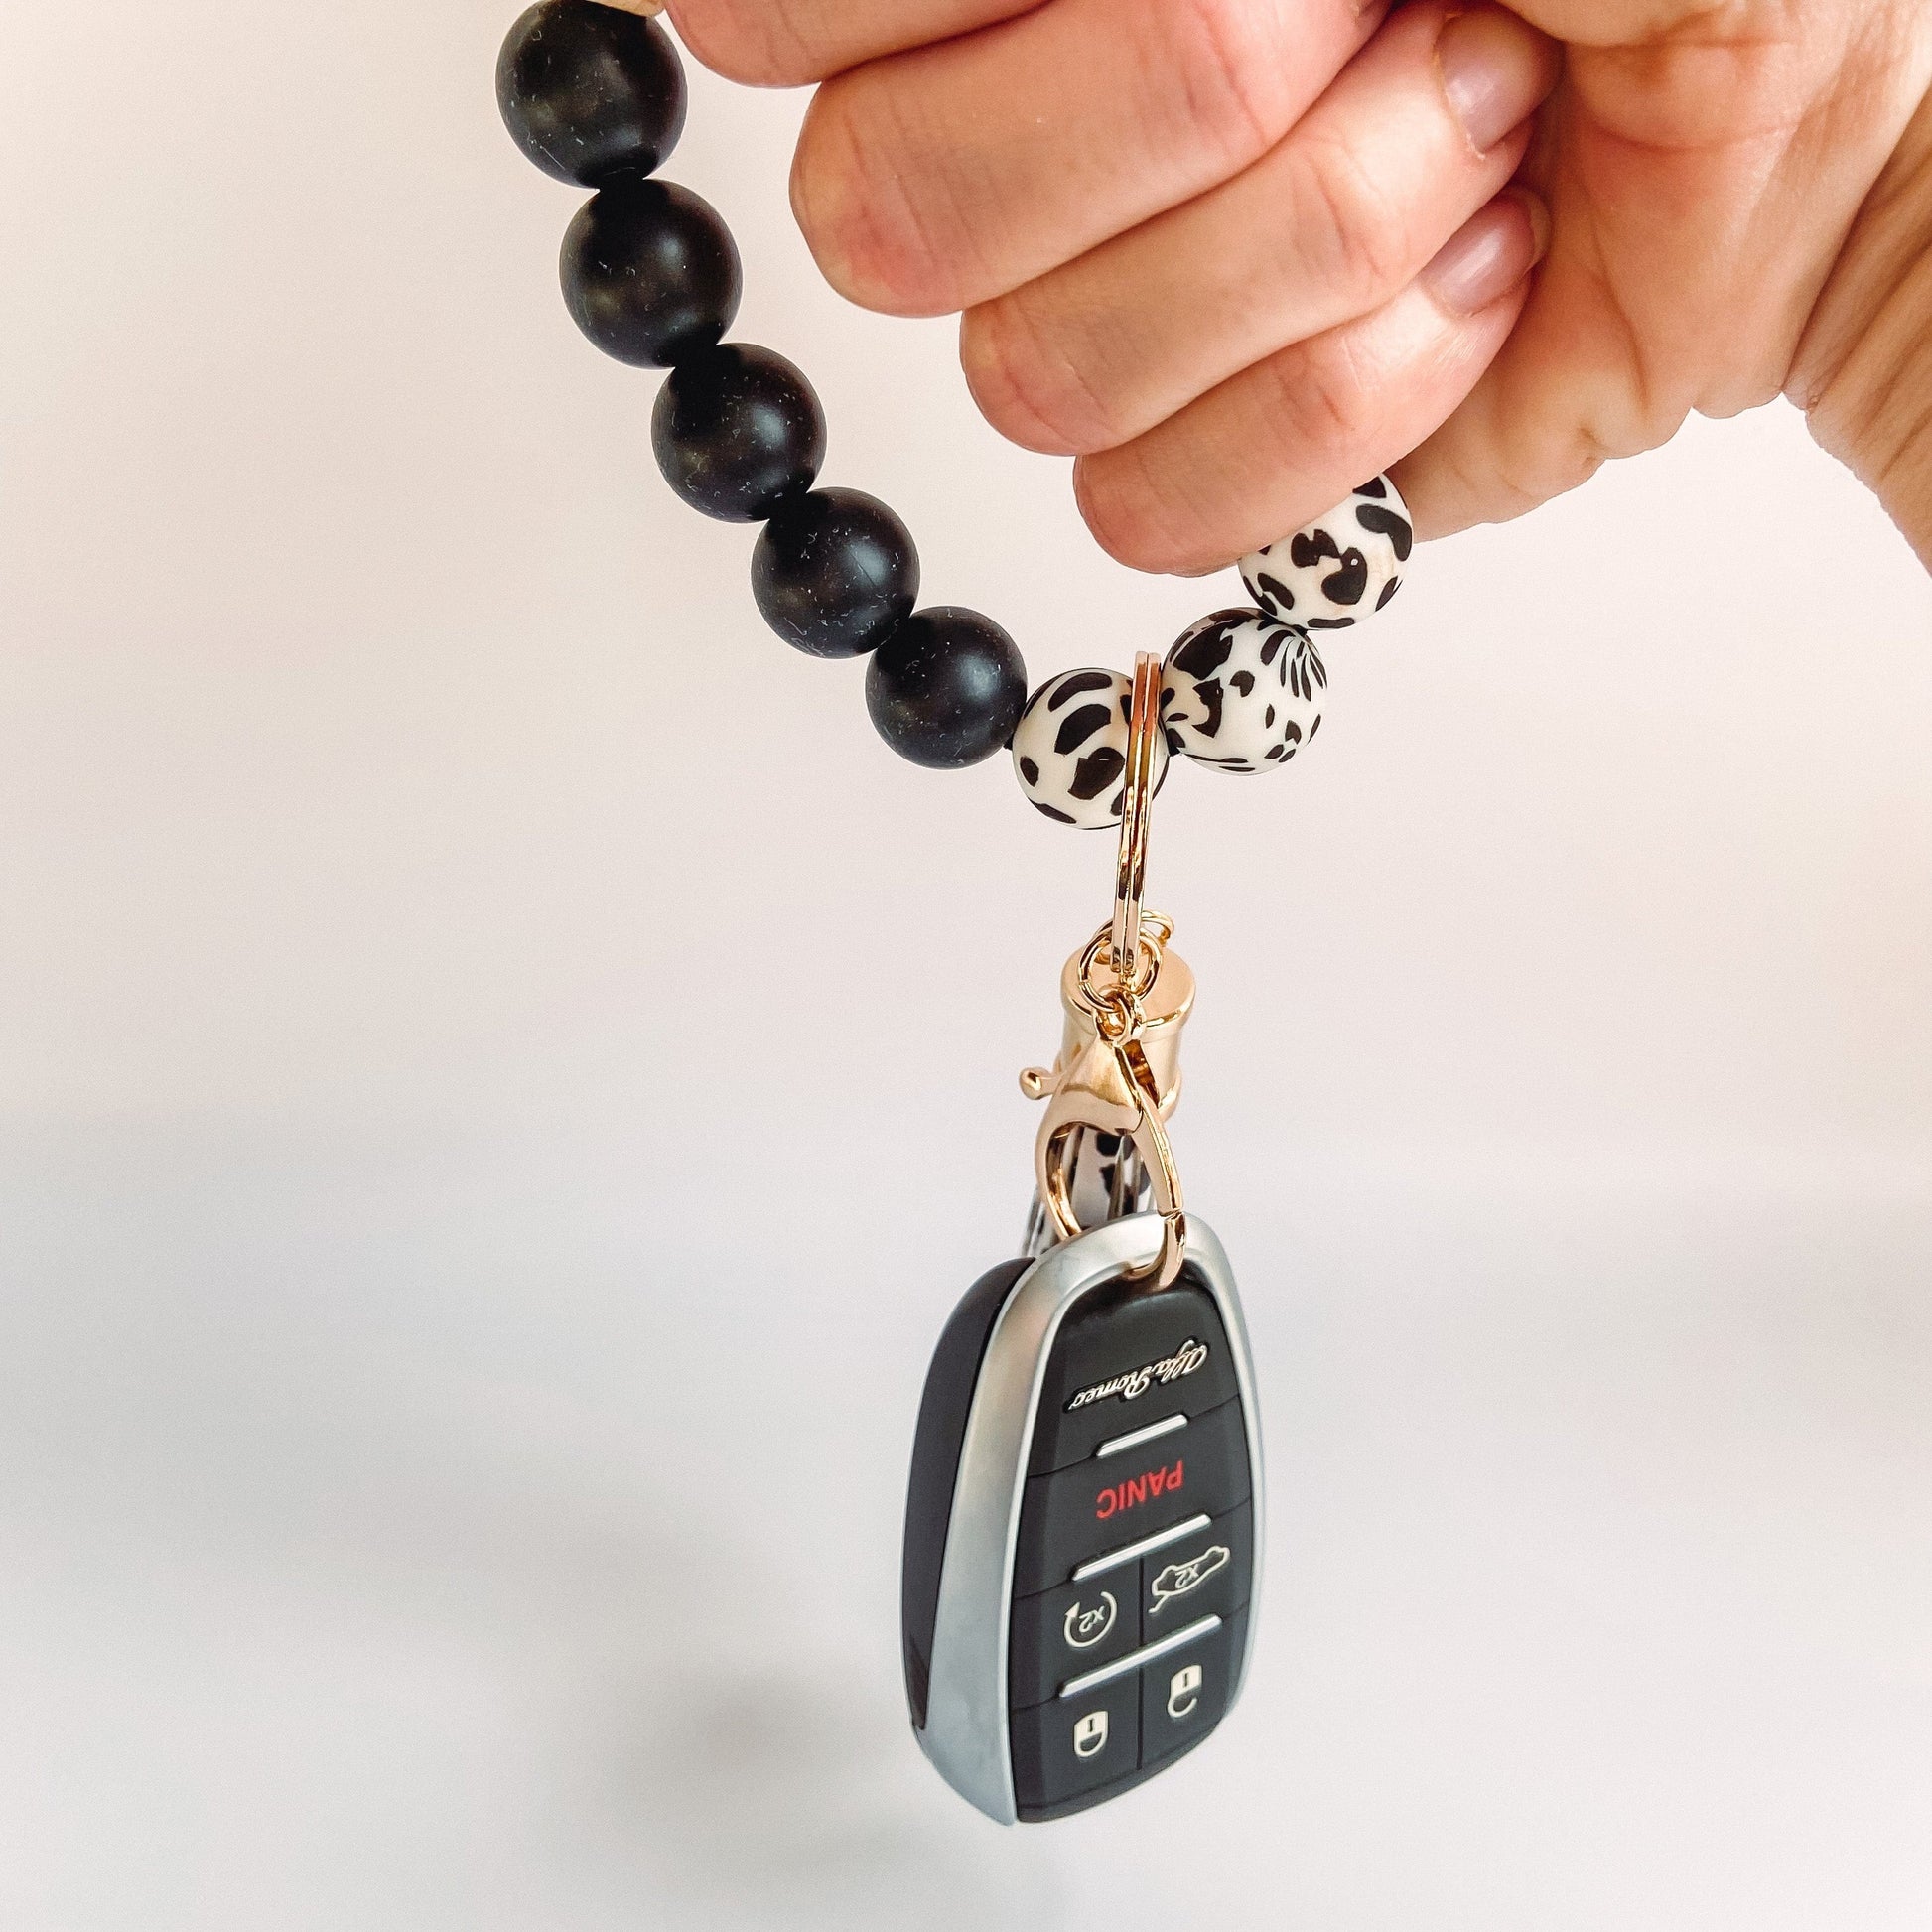 Silicone Keychain Bracelet For Car Keys Fashionable Round Wristlet